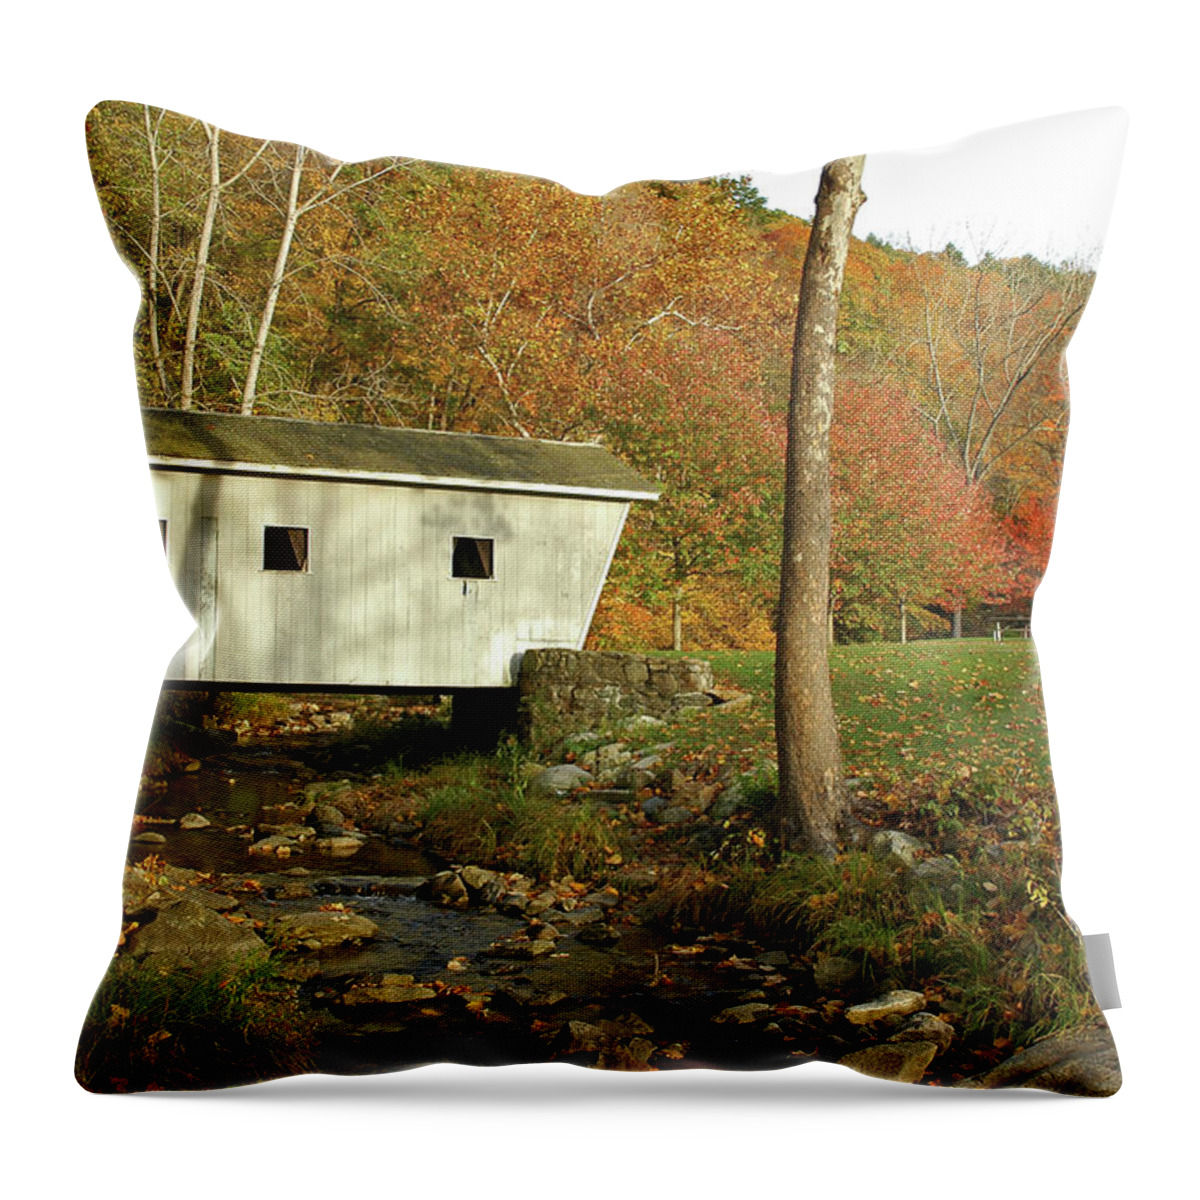 Estock Throw Pillow featuring the digital art Covered Bridge by Stephen G. Donaldson